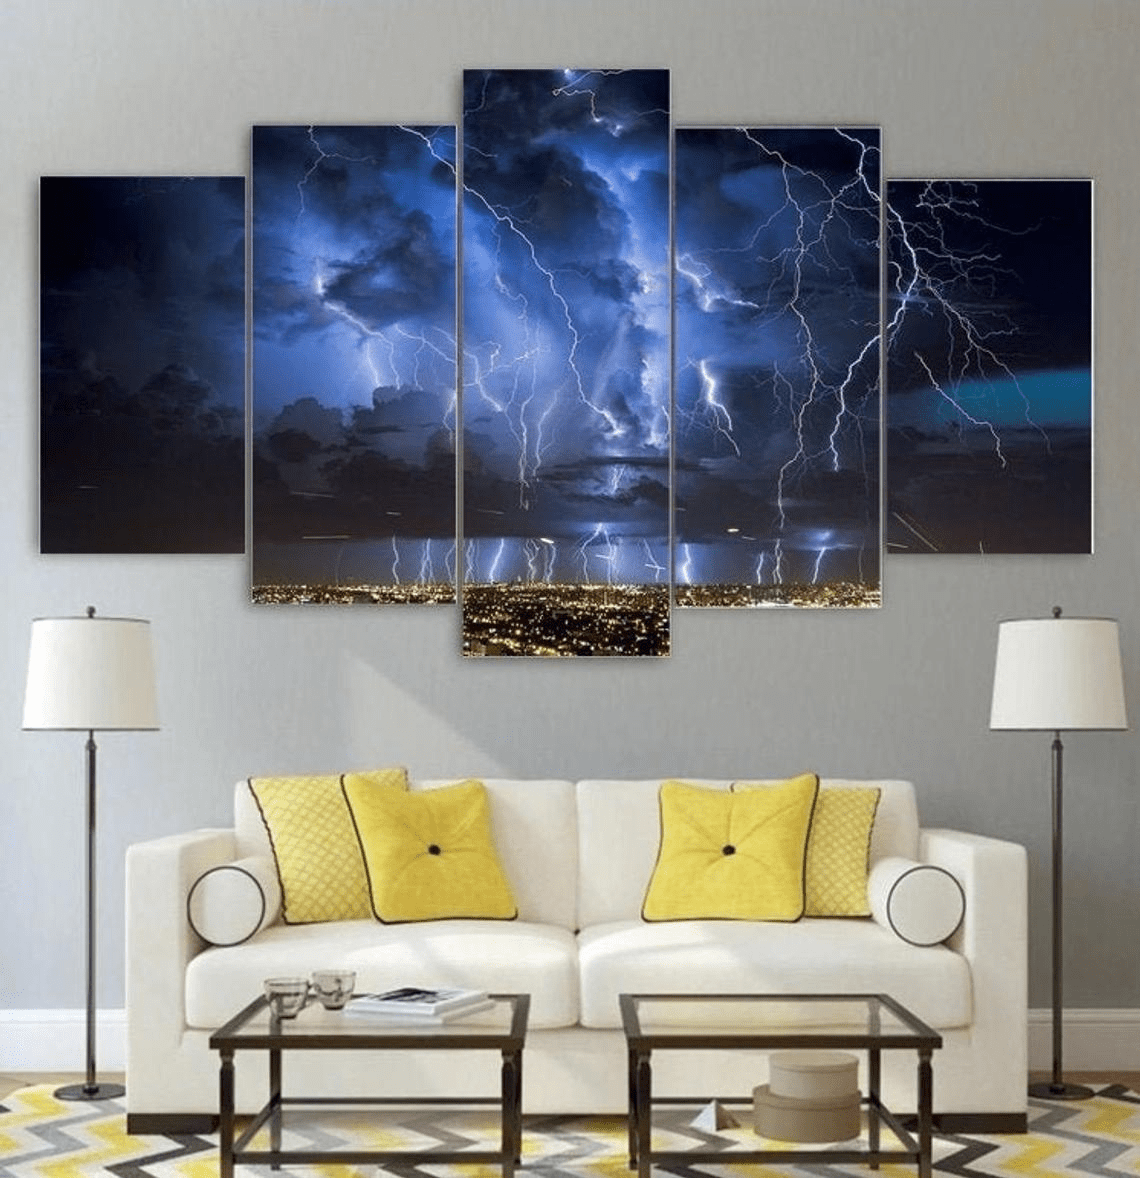 Thunder And Lightning Canvas - Thunder And Lightning Wall Art Framed - Storm Decor Framed - Night Landscape Gift Idea 5 Piece Poster